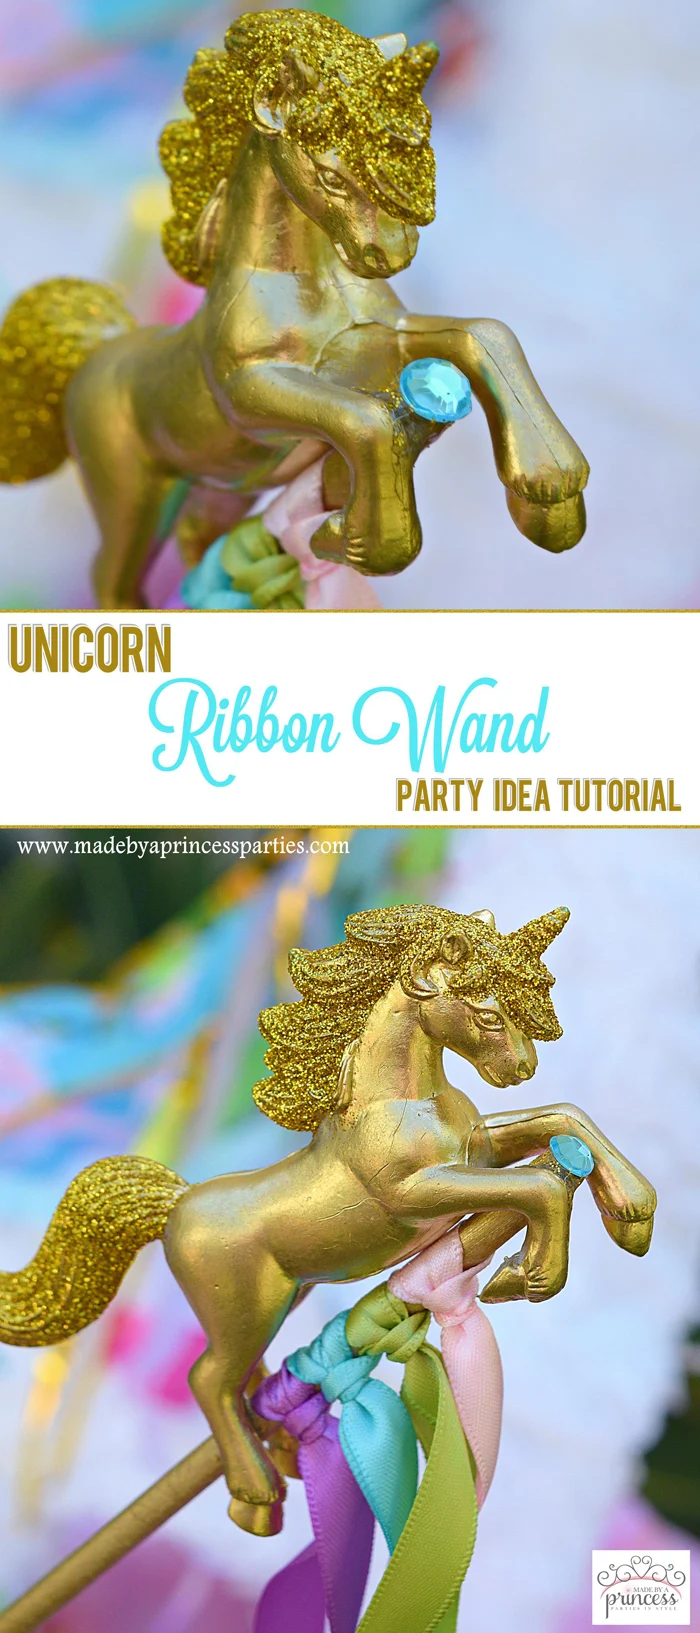 Unicorn Ribbon Wand Party Idea Tutorial pin it